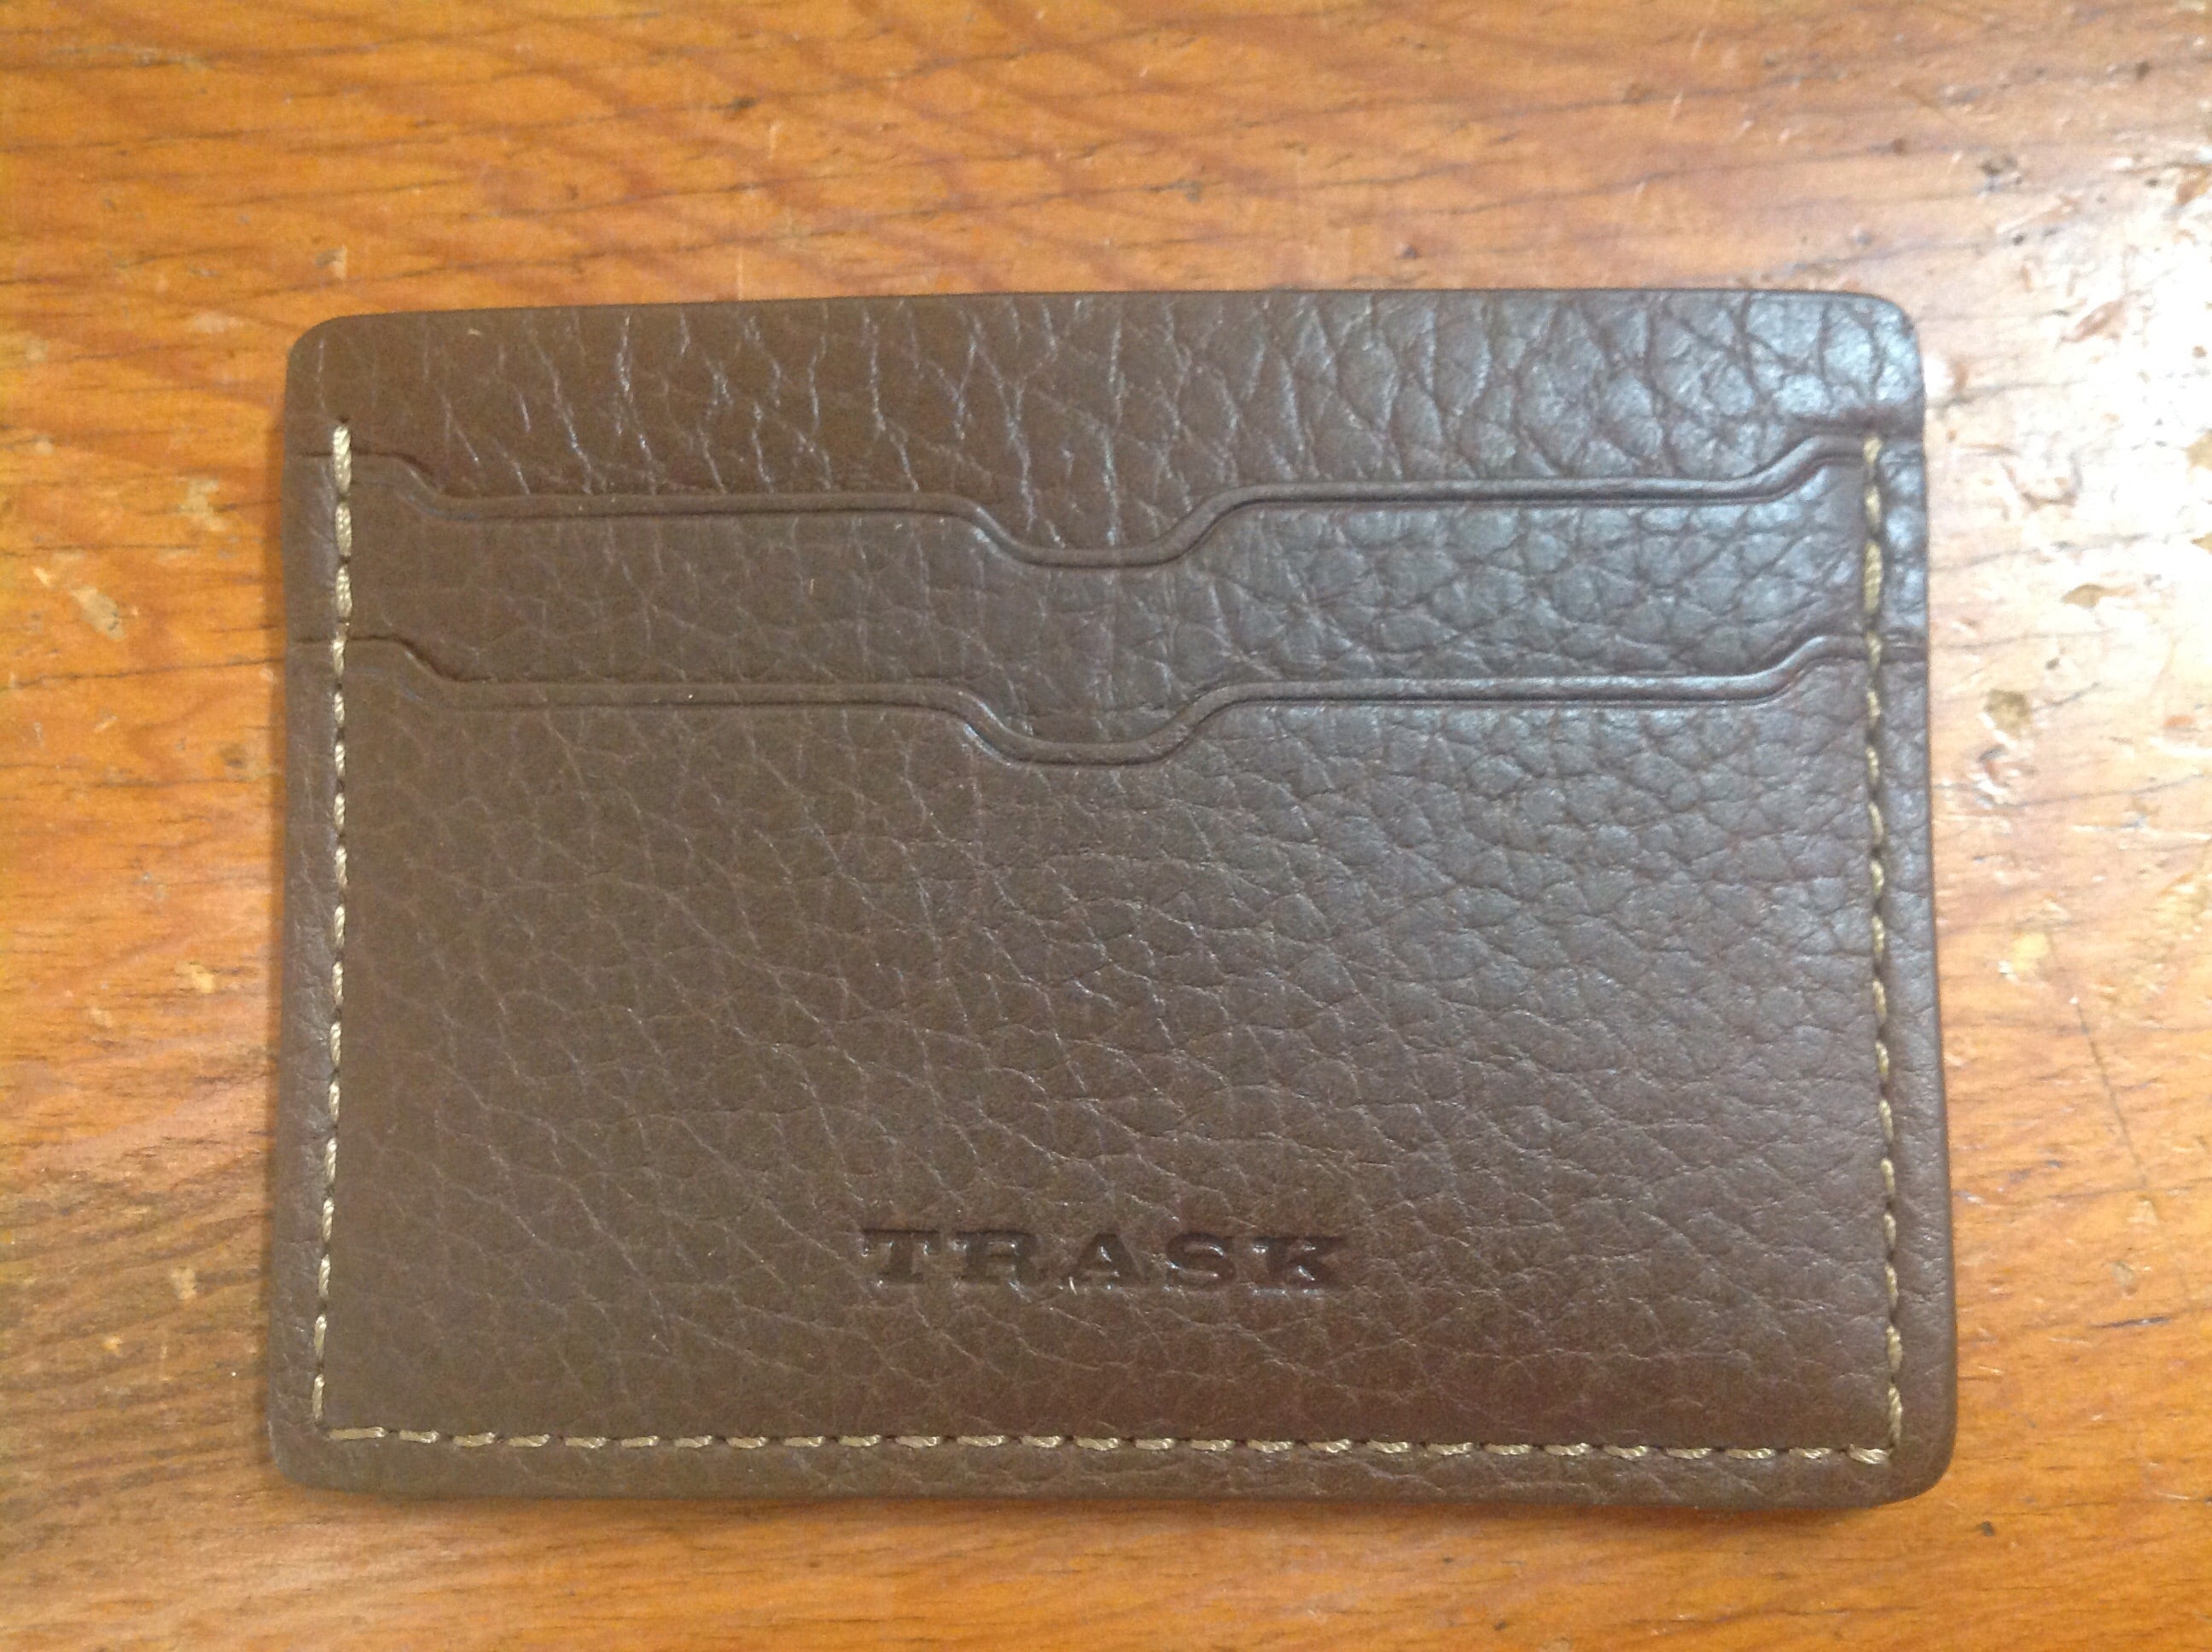 Trask "Weekender" - credit card and license case